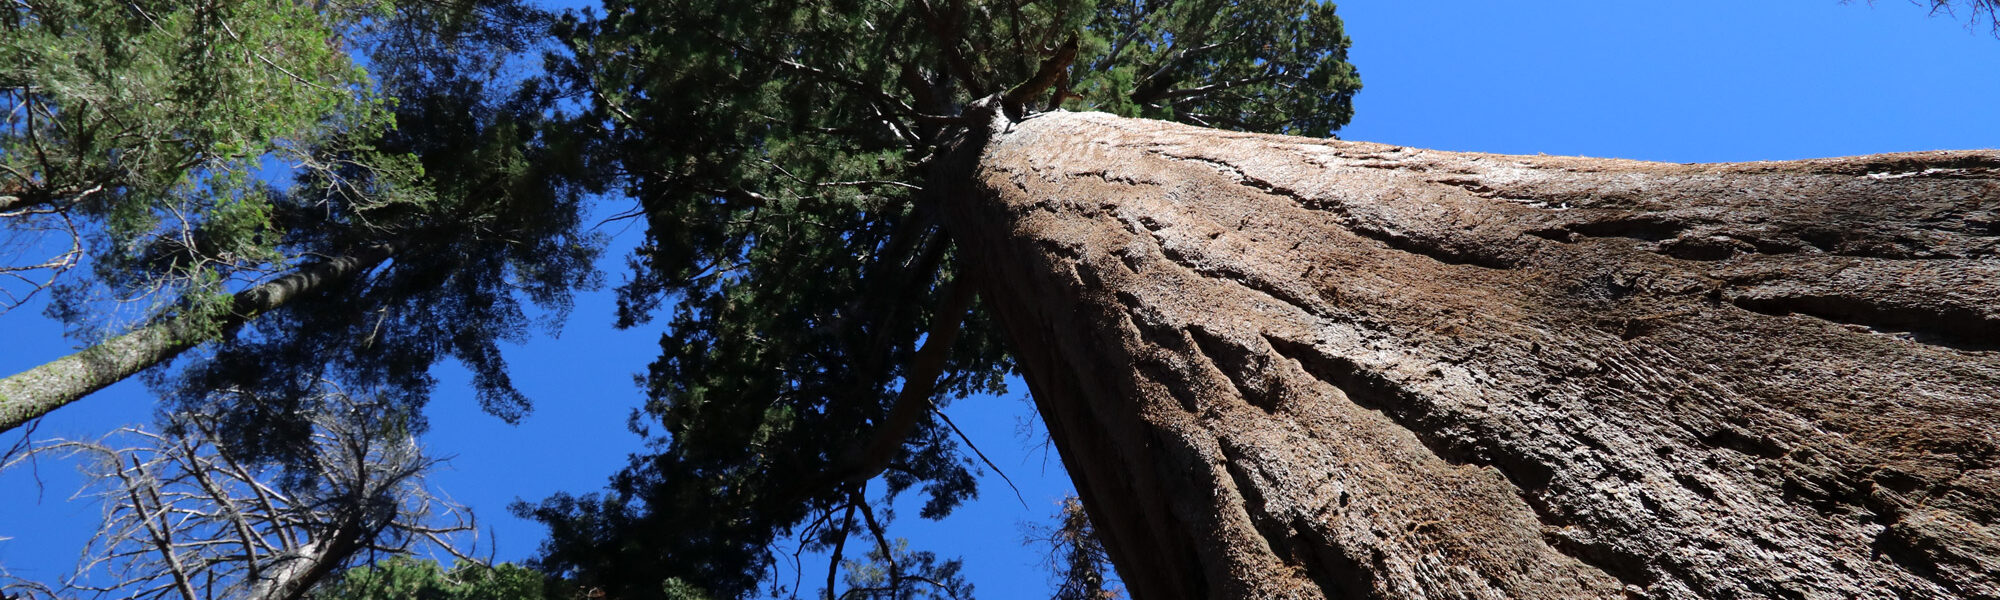 Sequoia National Park - Californië - Verenigde Staten